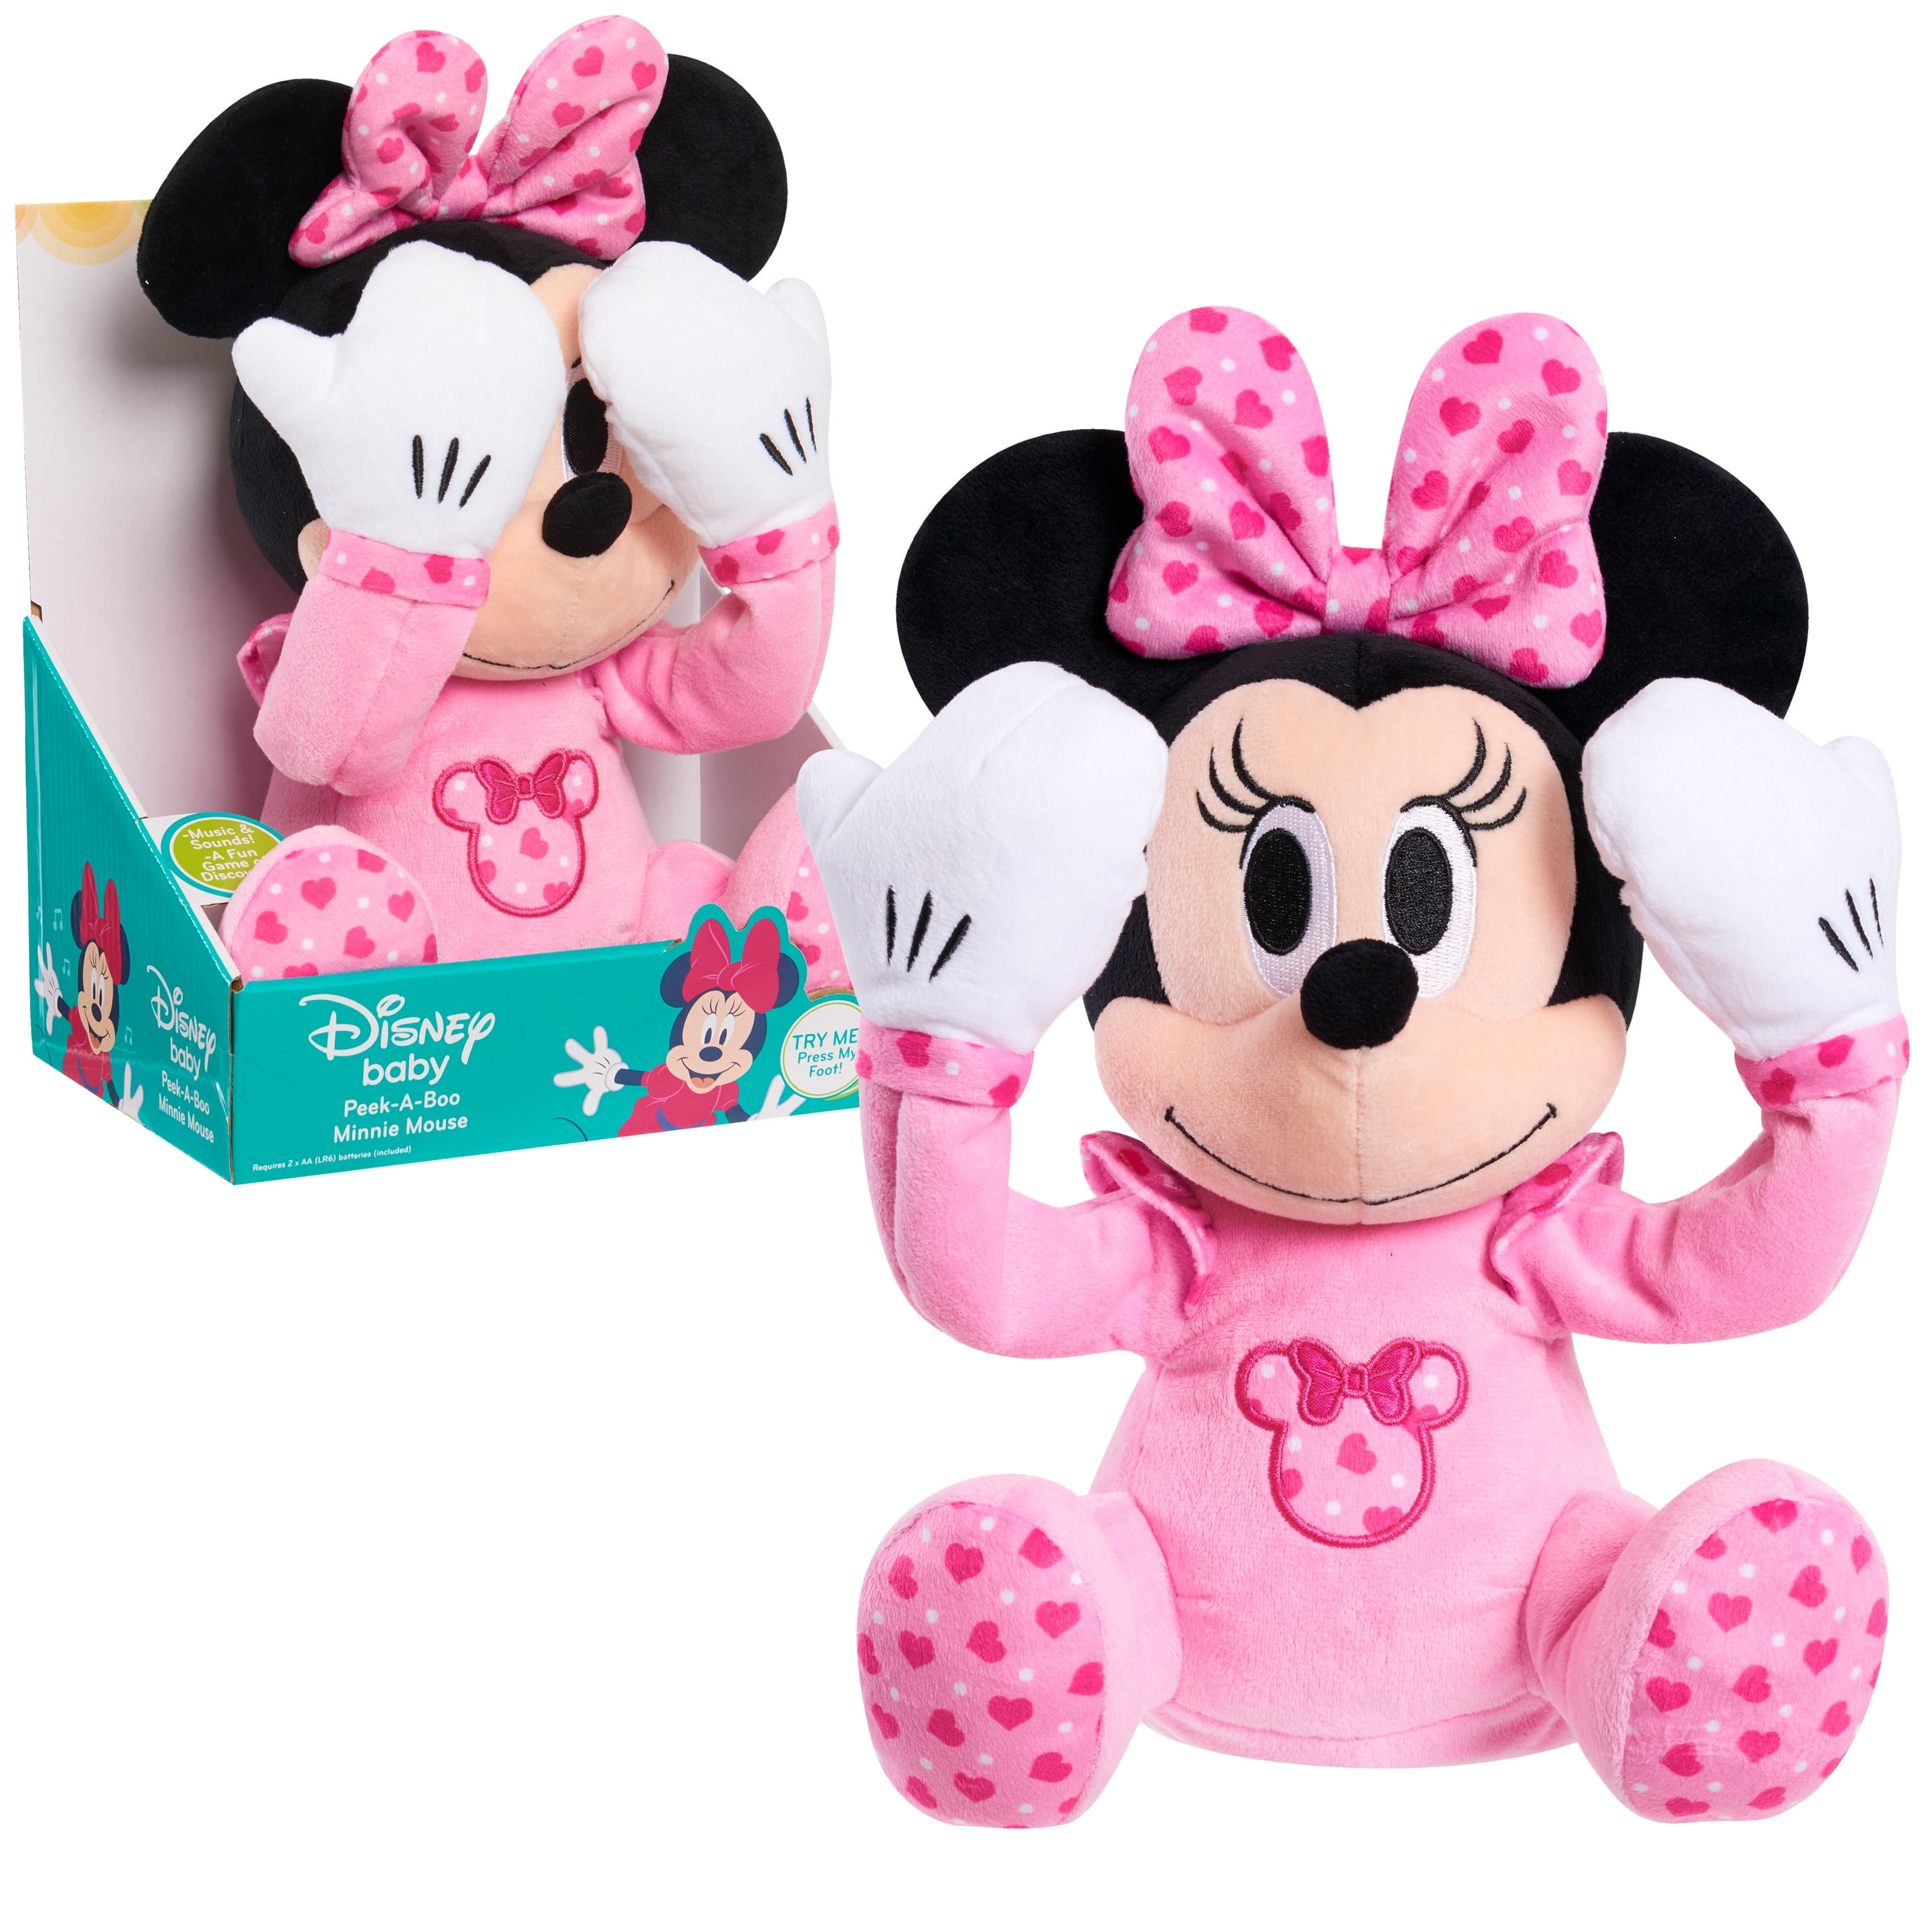 Disney Baby Peek-A-Boo Plush, Minnie Mouse, Sweden